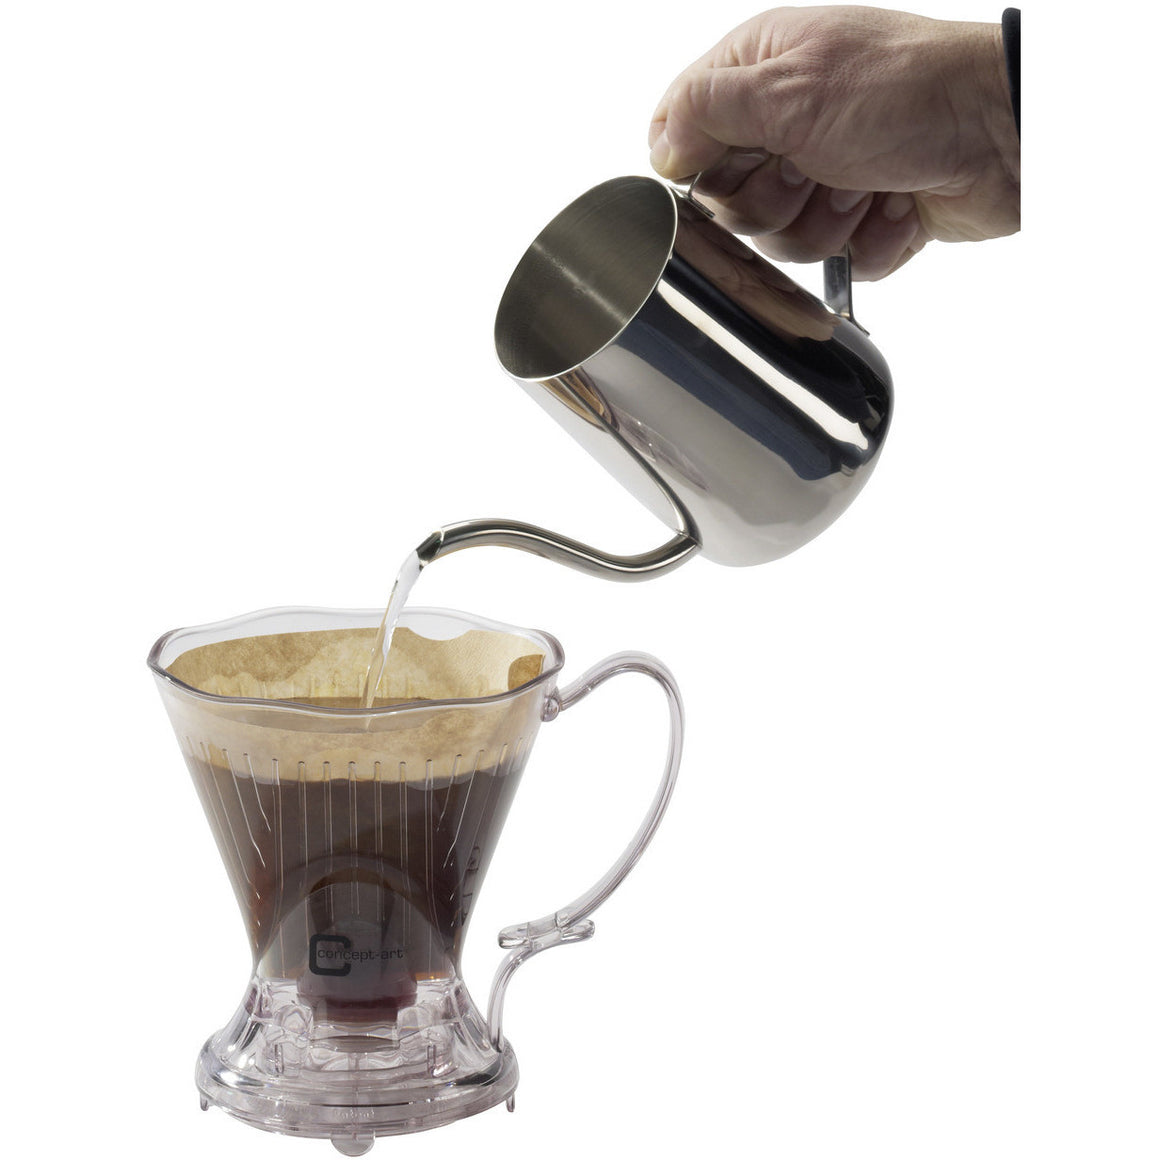 Coffee Drip Kettle by Joe Frex - My Espresso Shop